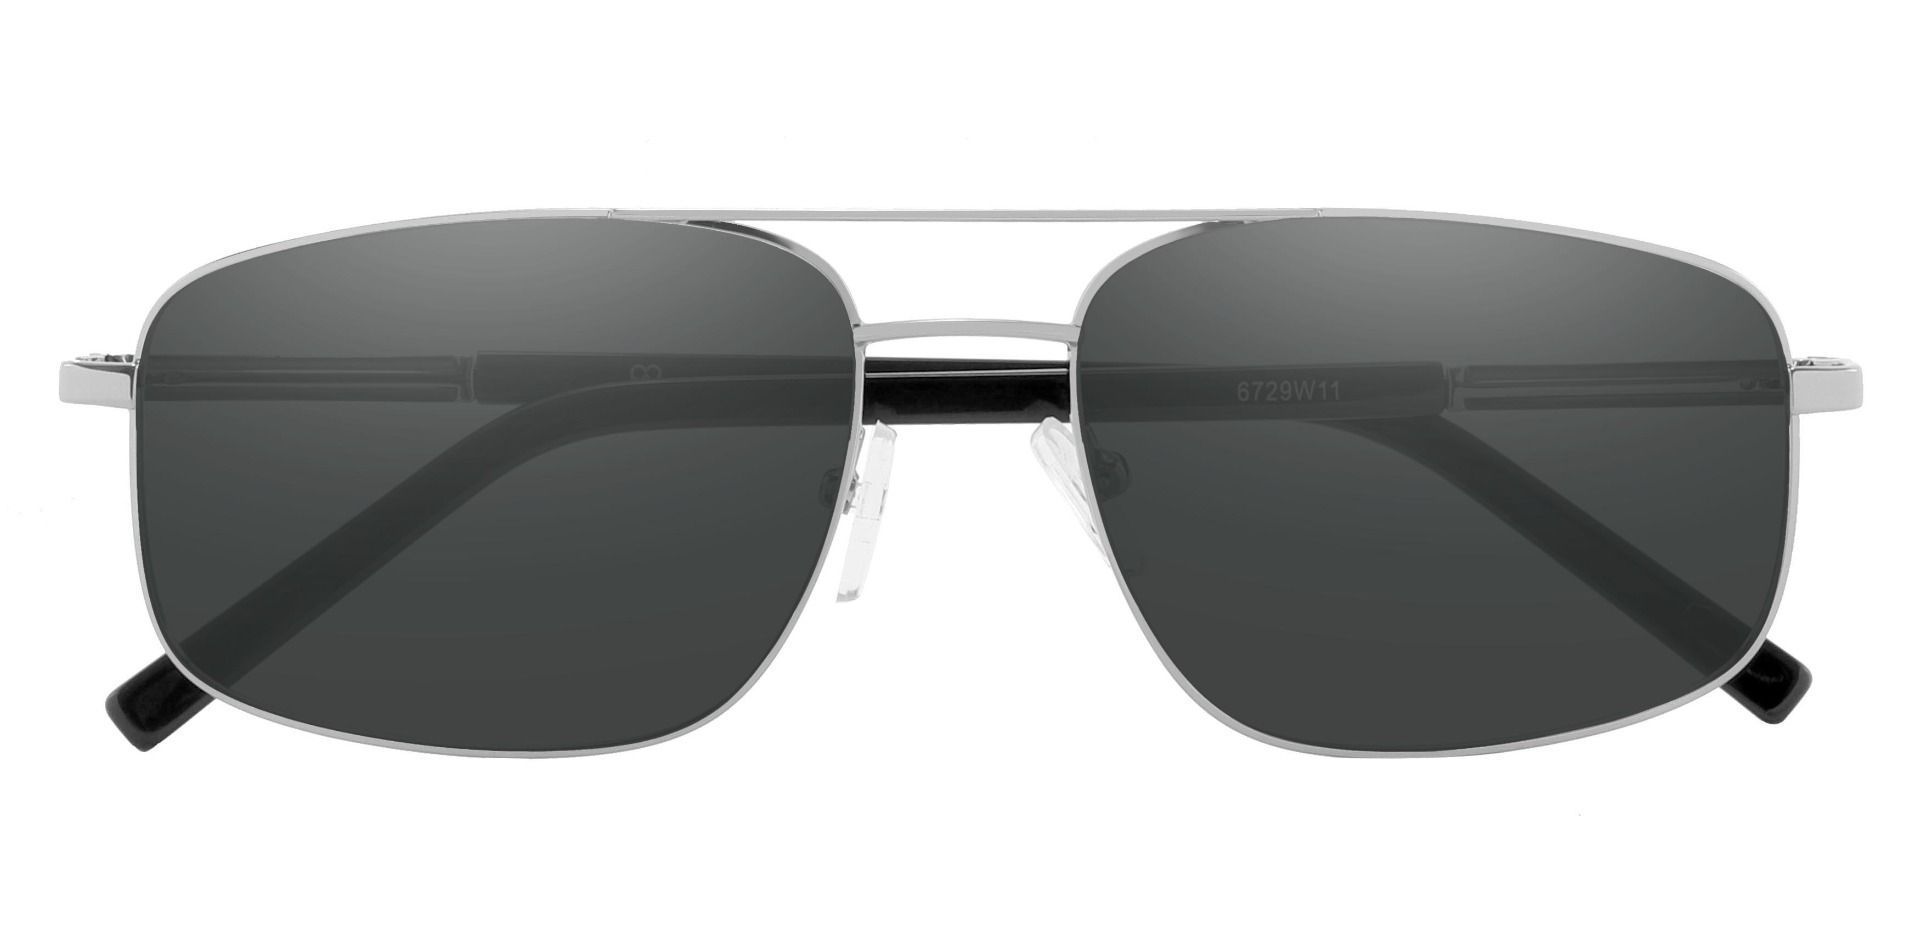 Davenport Aviator Non-Rx Sunglasses - Silver Frame With Gray Lenses